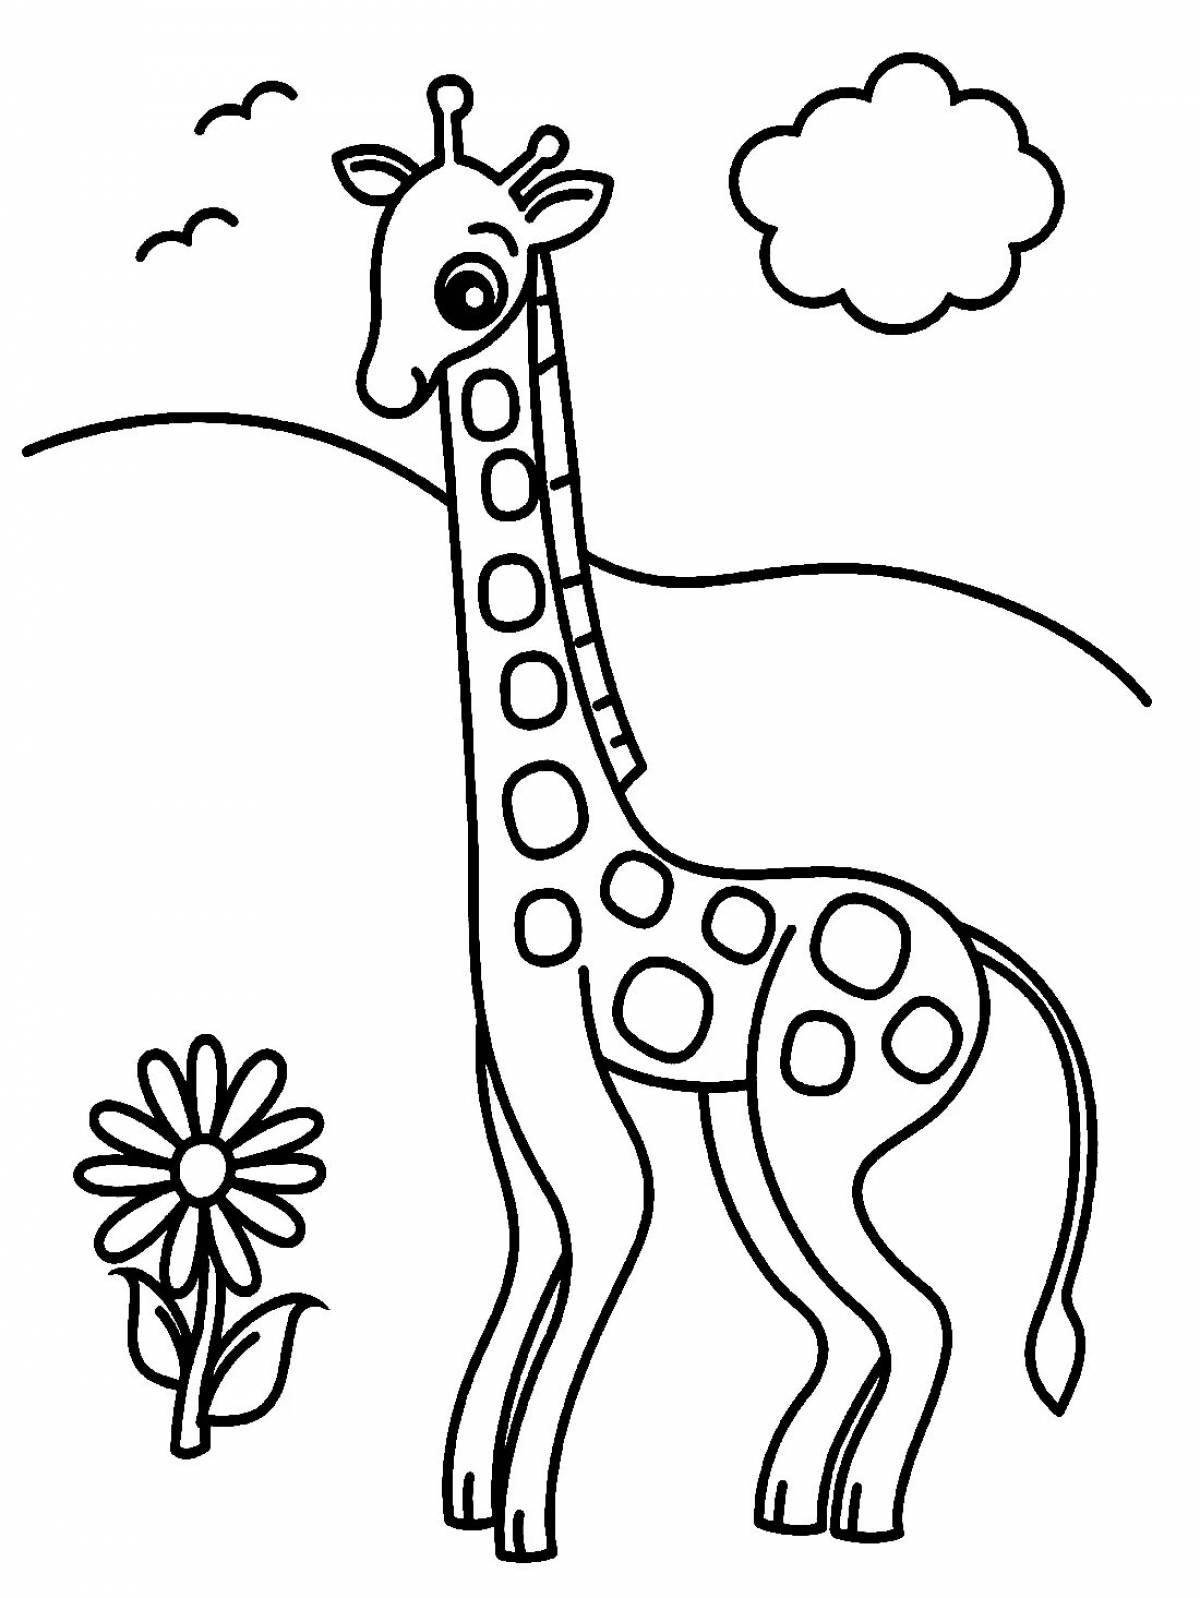 Outstanding preschool giraffe coloring page